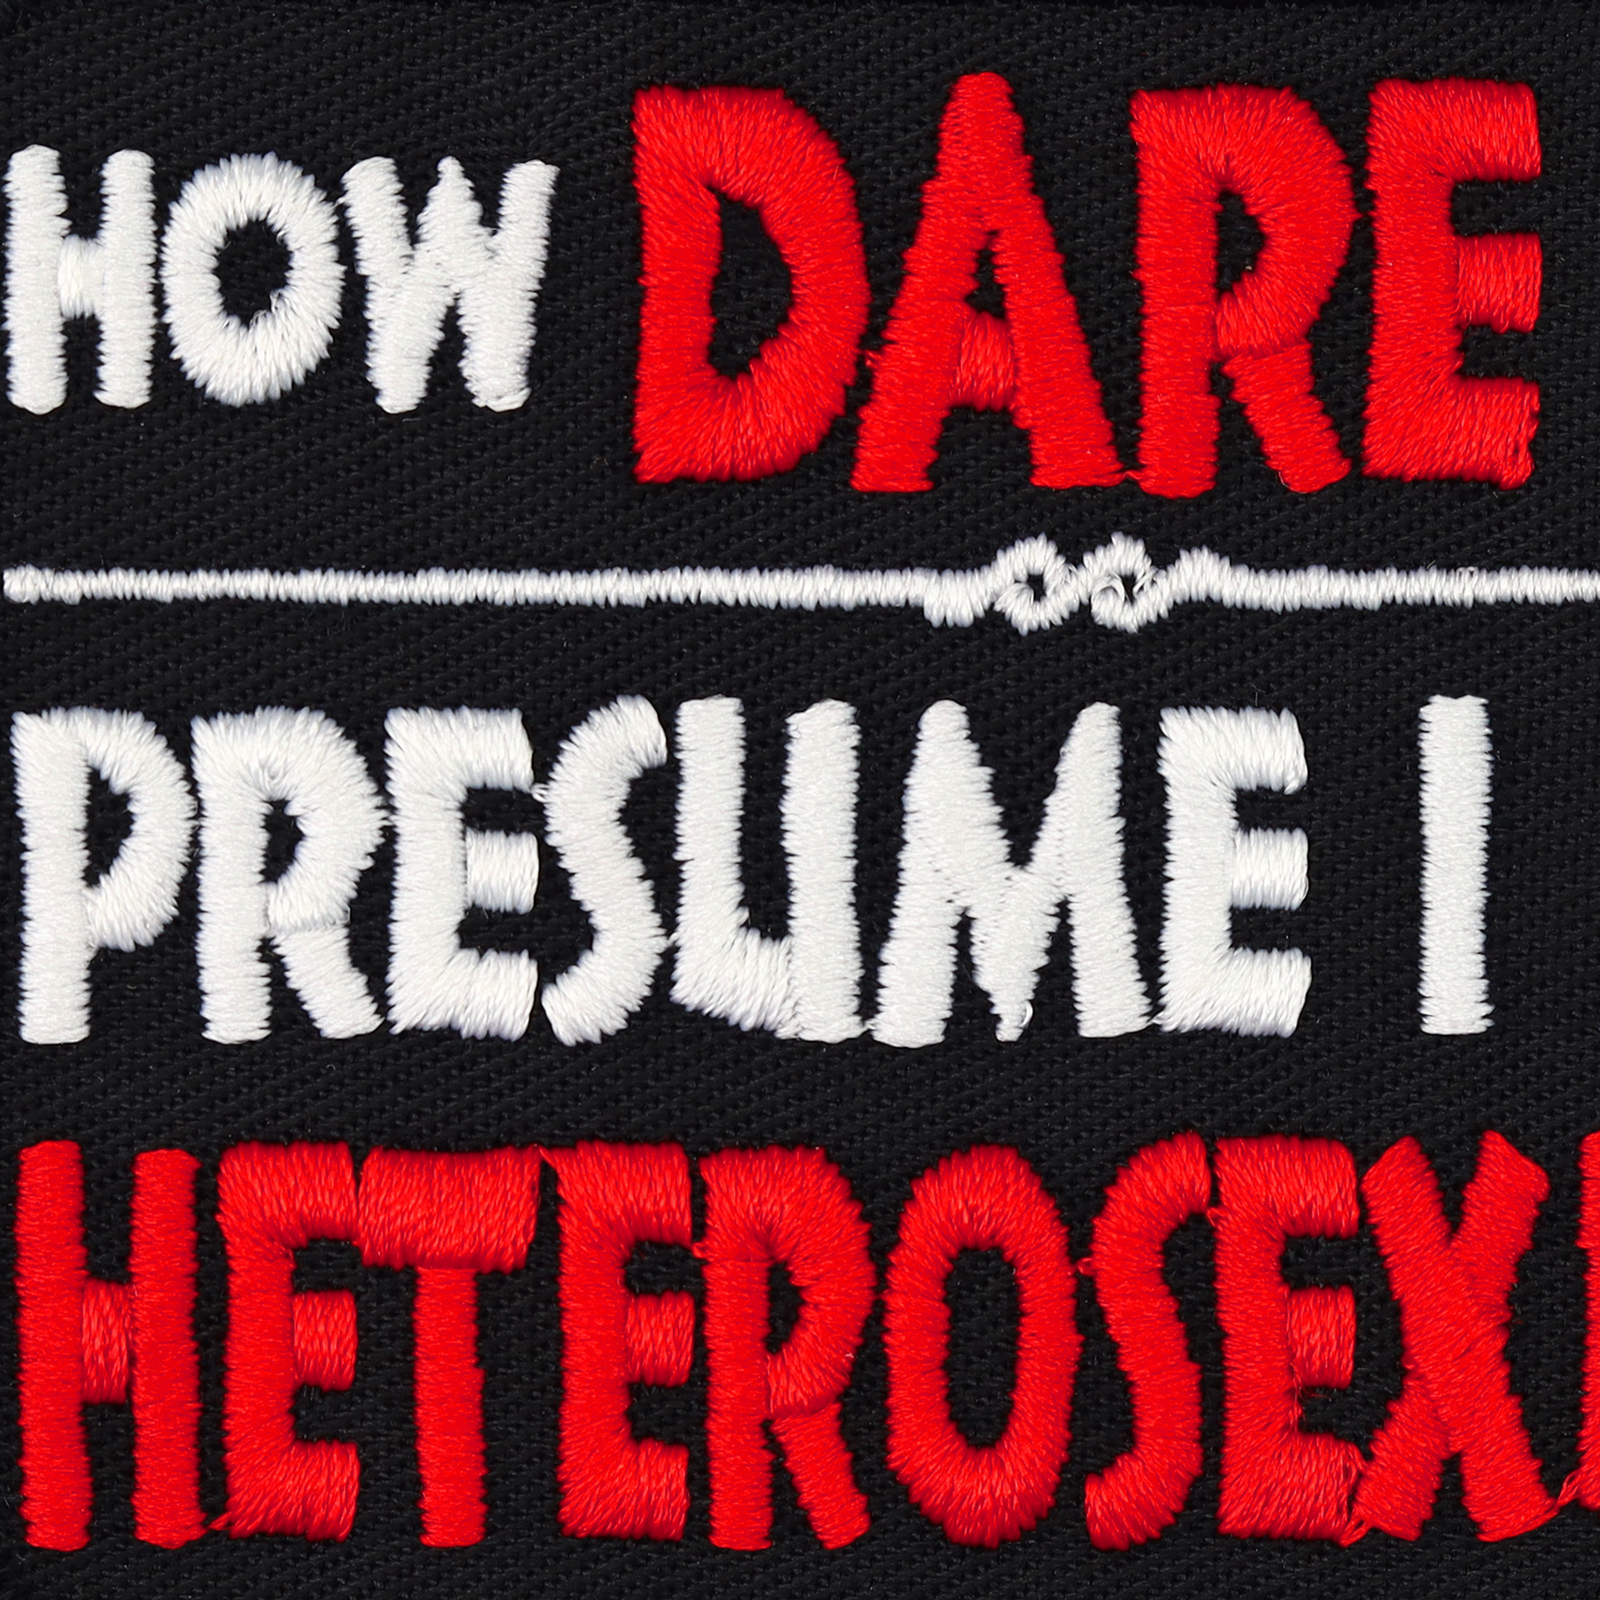 How dare you - presume I am heterosexual. - Patch